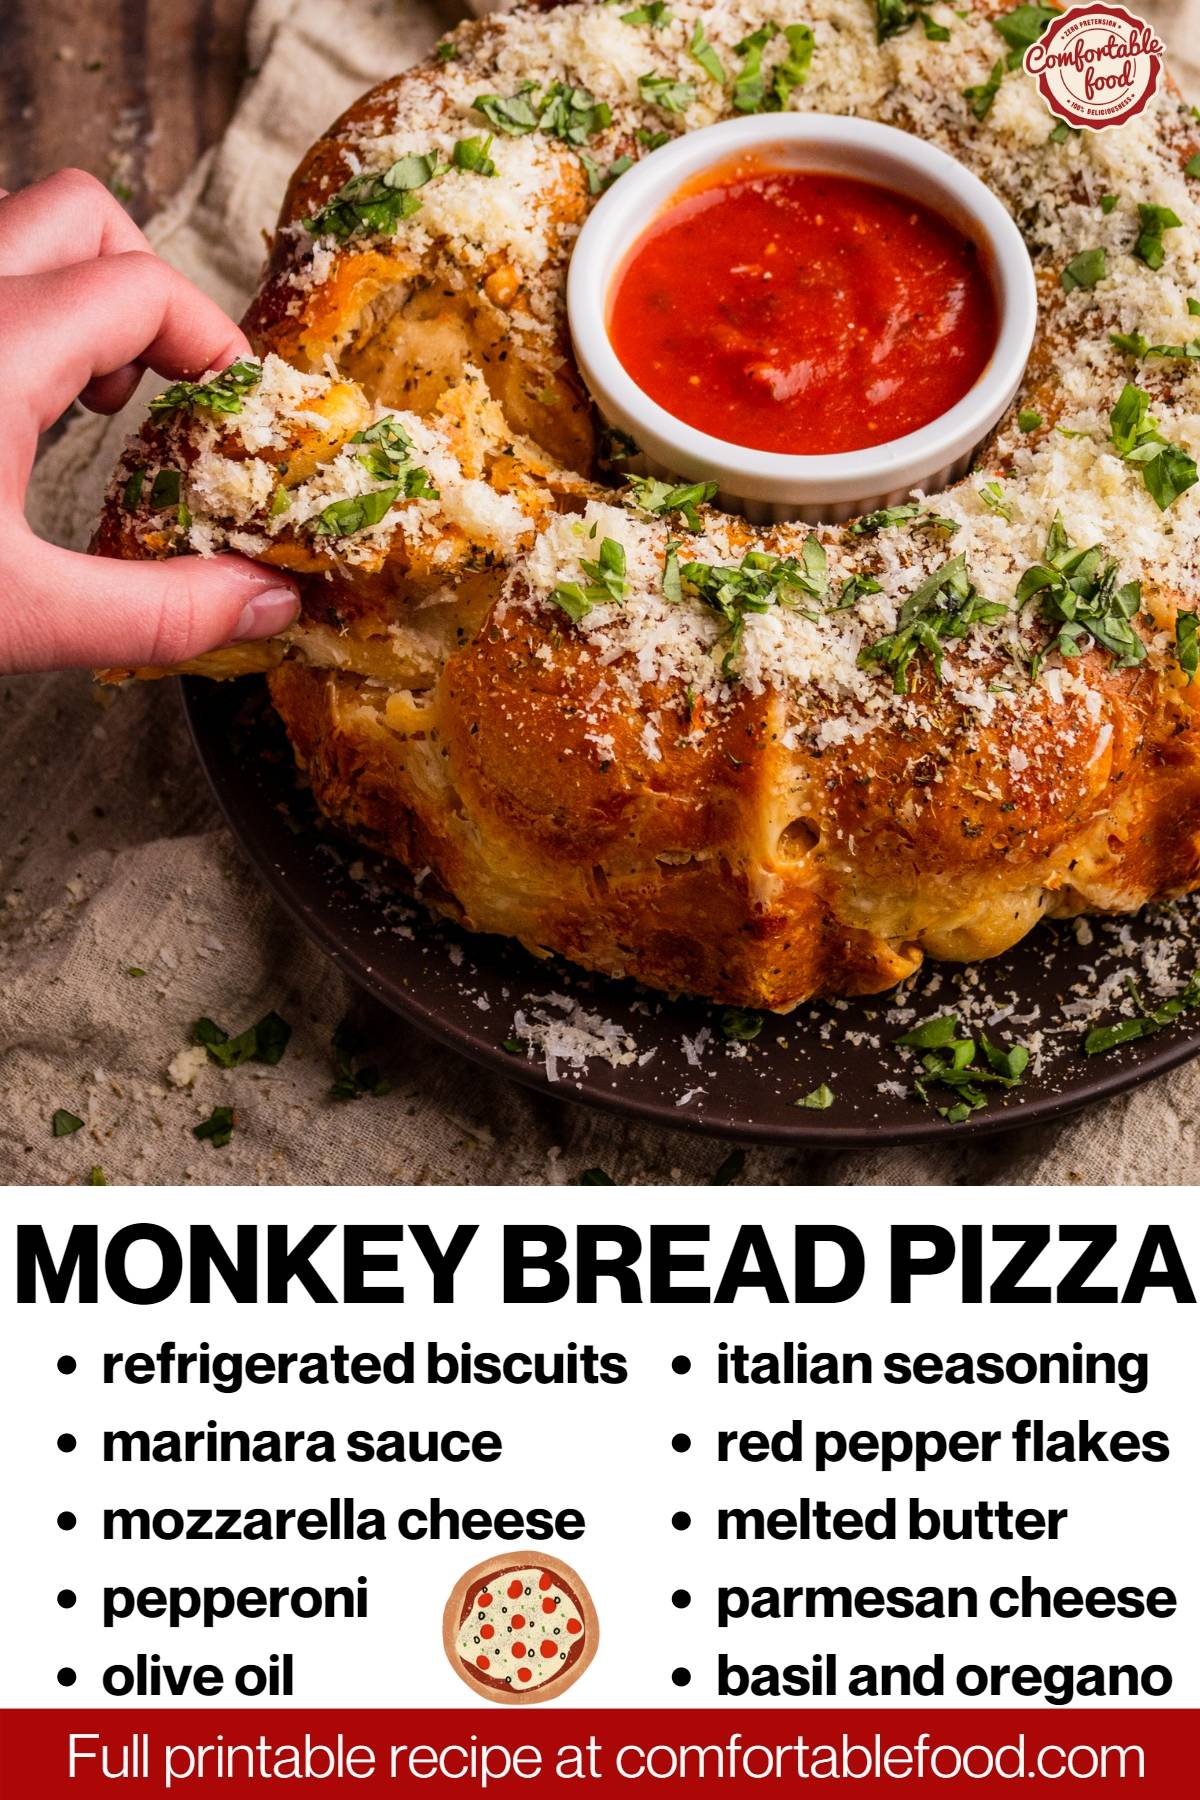 Monkey bread pizza socials